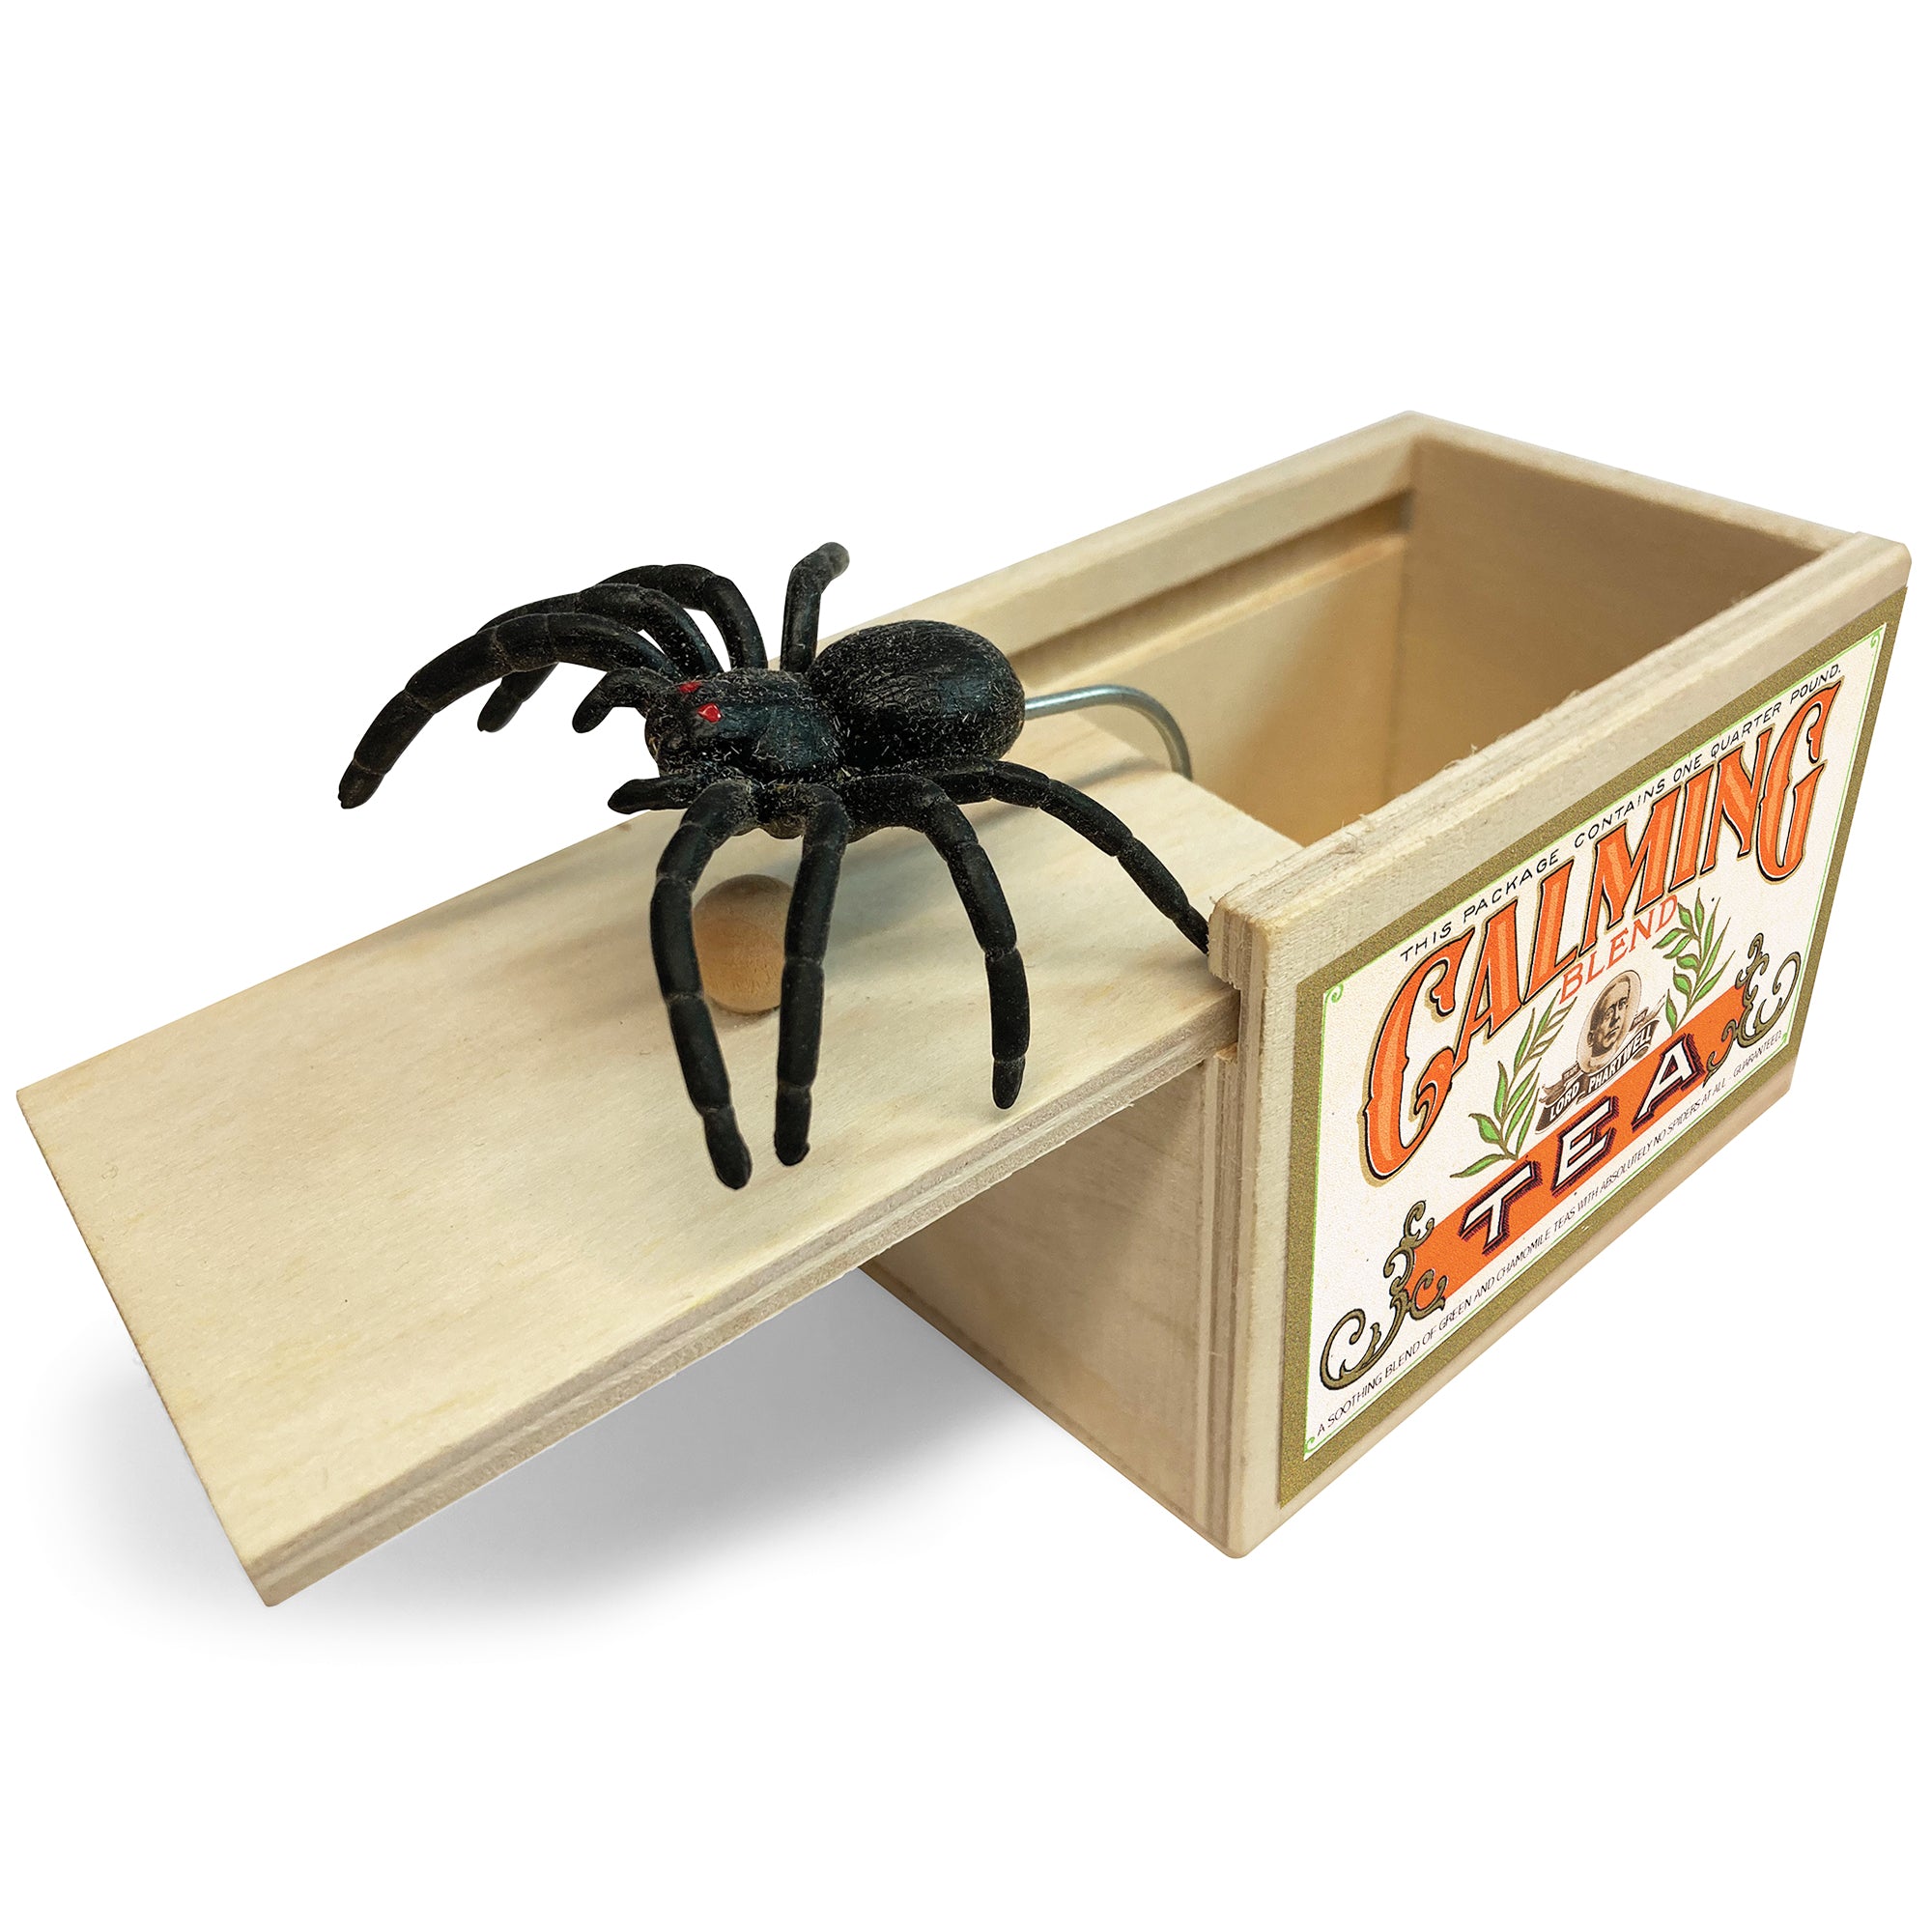 Spider Surprise Box